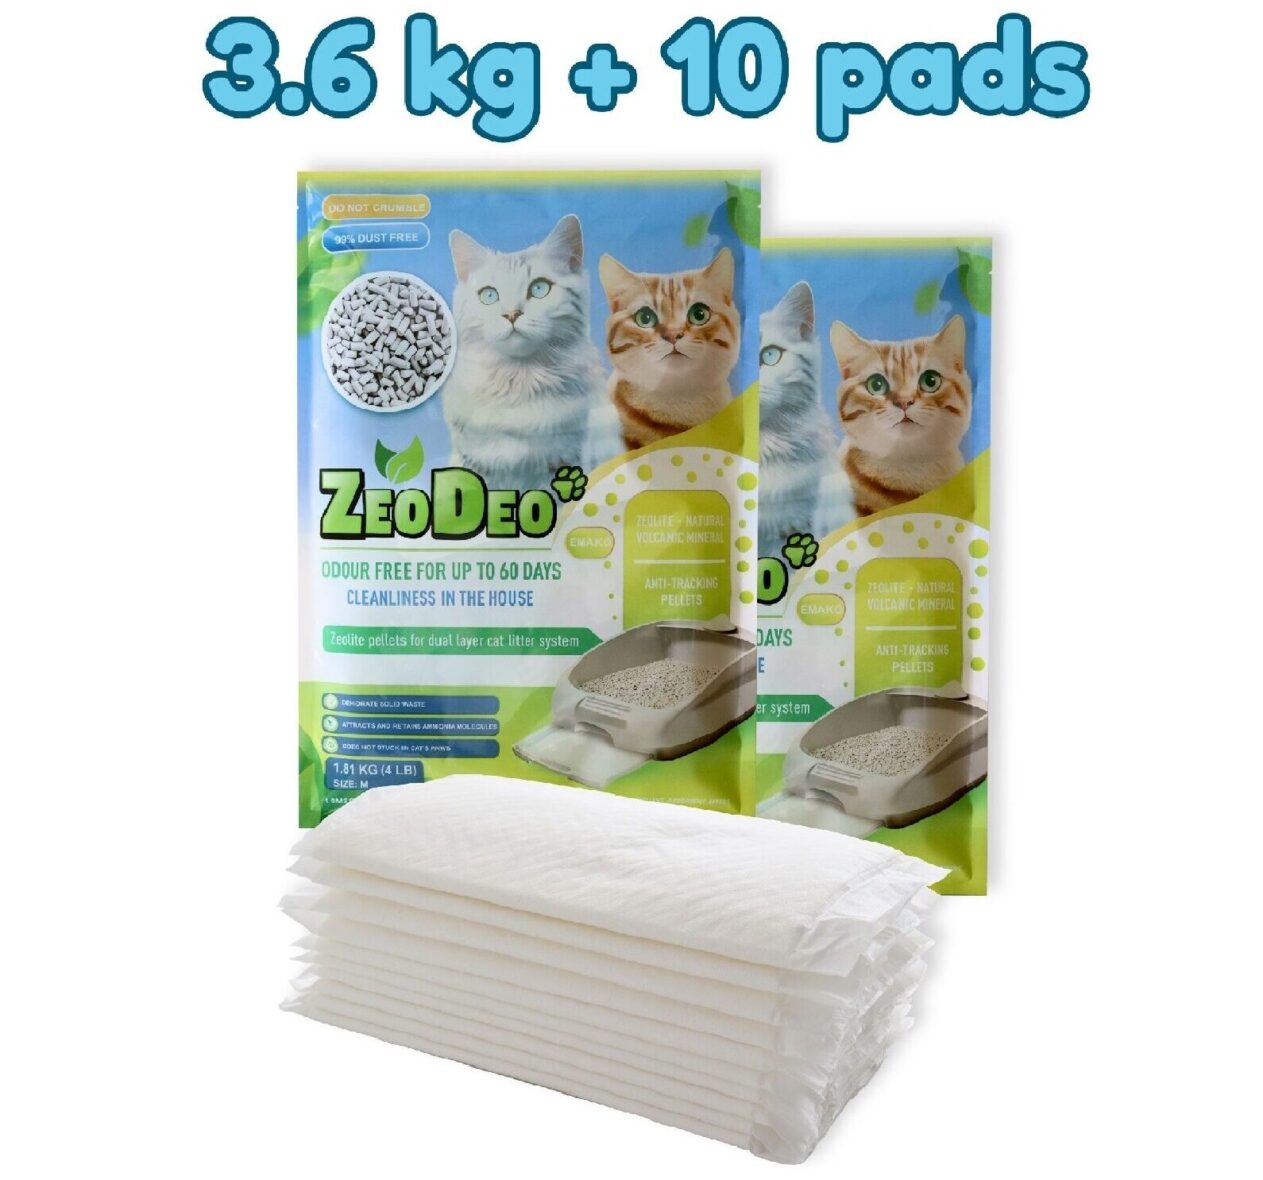 Zeolite Cat Litter Pellets “ZeoDeo” 3.6 kg (8Lb) + 10 pads